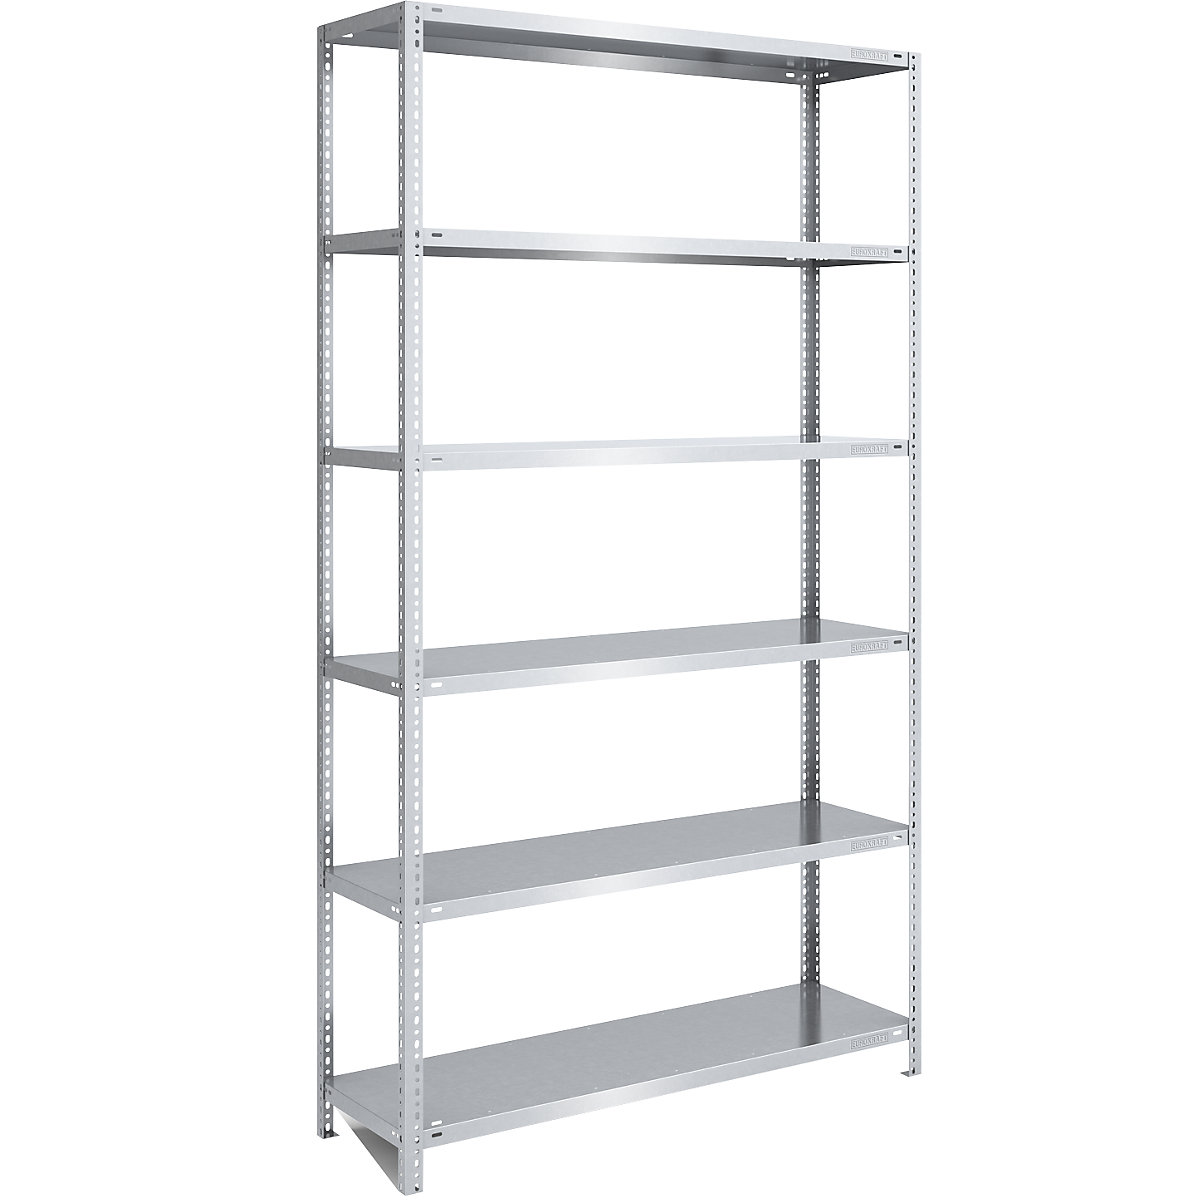 Bolt-together shelf unit, light duty, zinc plated – eurokraft pro, shelf unit height 2500 mm, shelf width 1300 mm, depth 500 mm, standard shelf unit-7